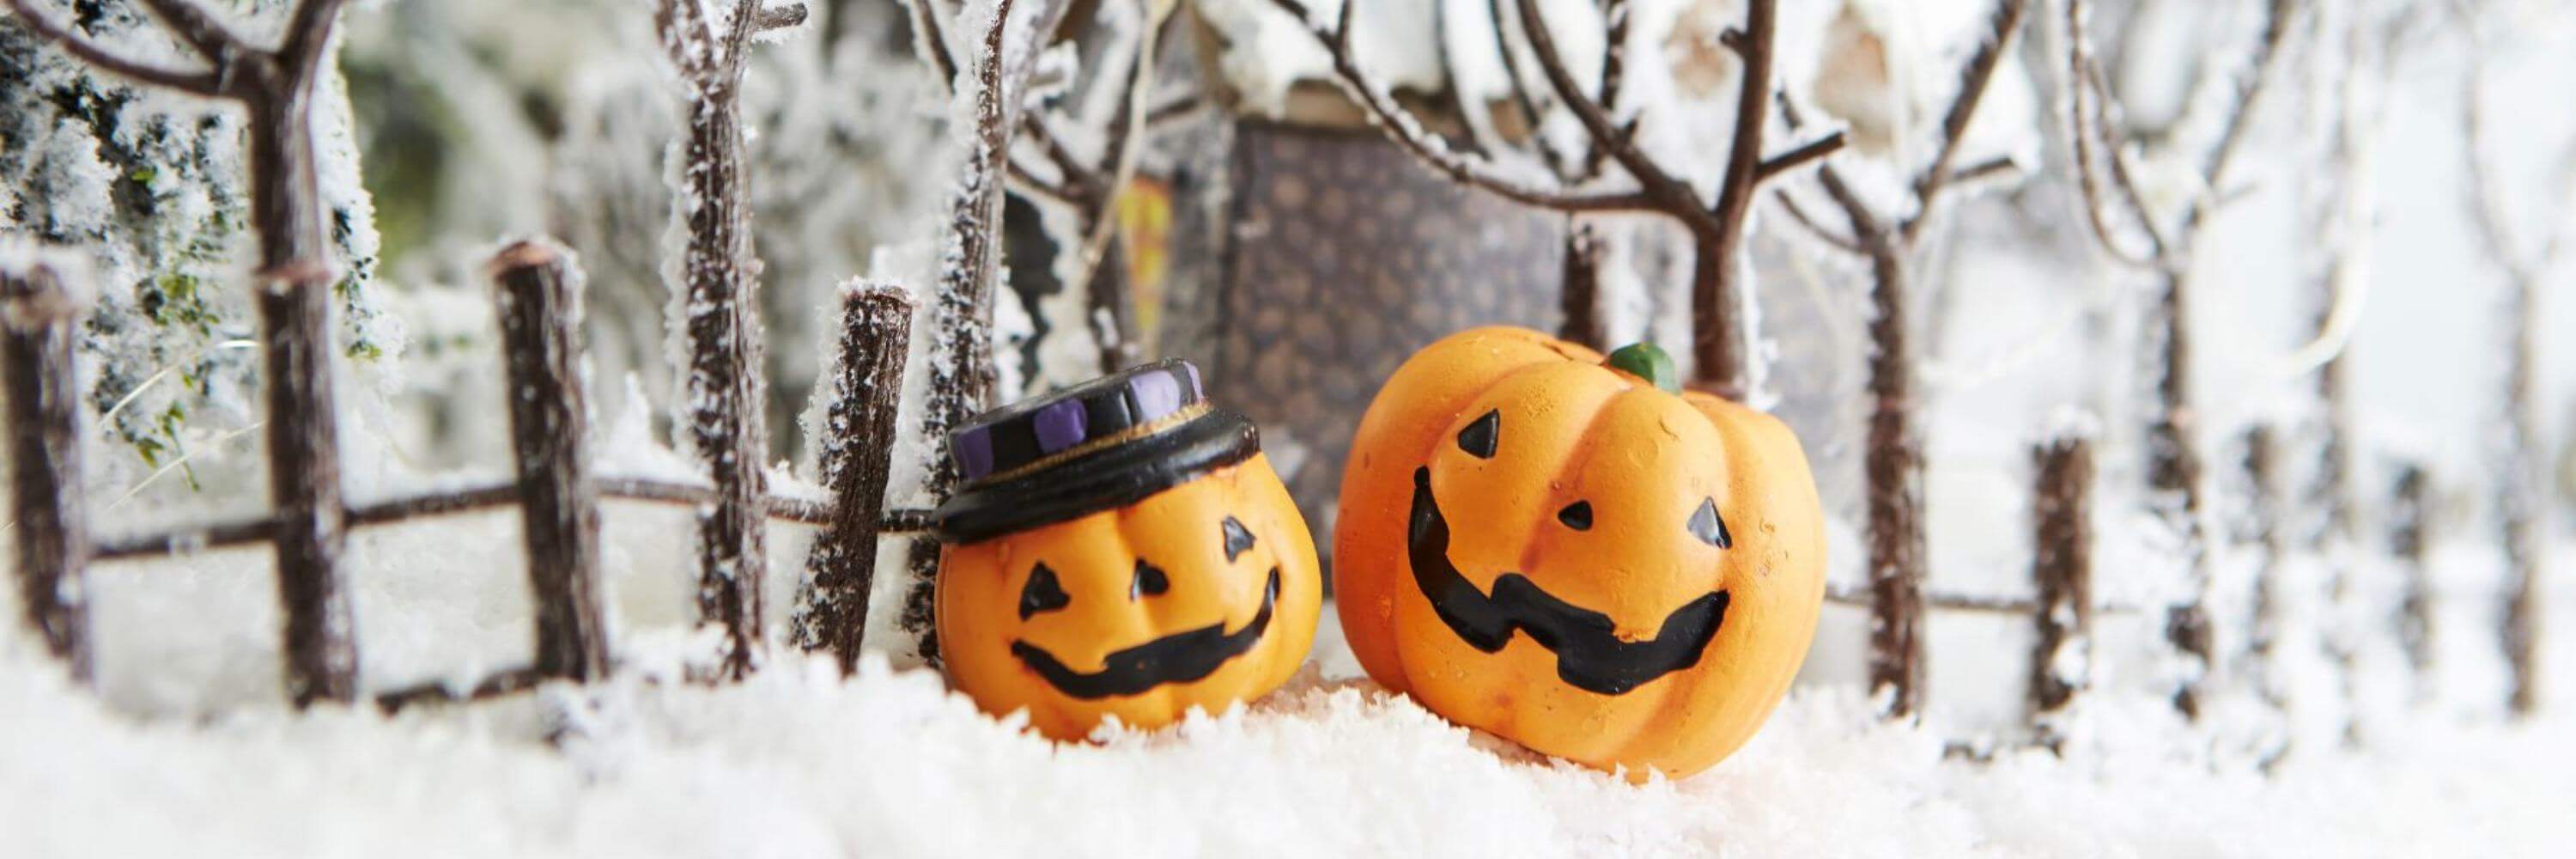 Halloween decor with two oragnge pumpkins